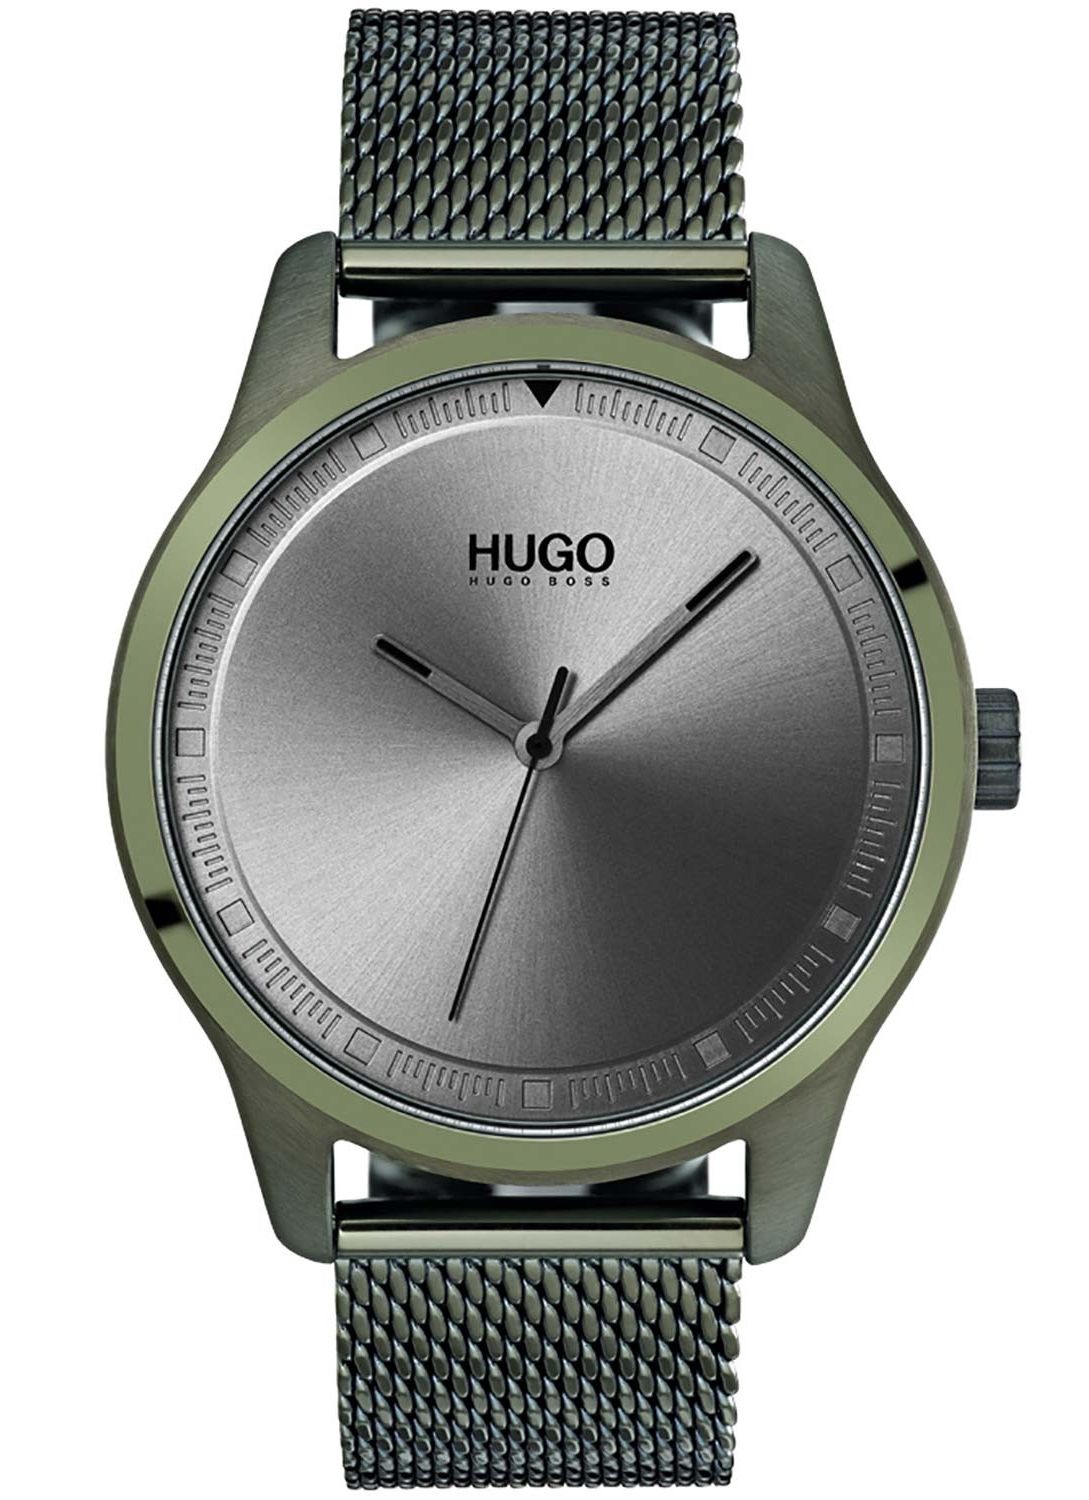 Hugo Boss Move 1530046 - RIP